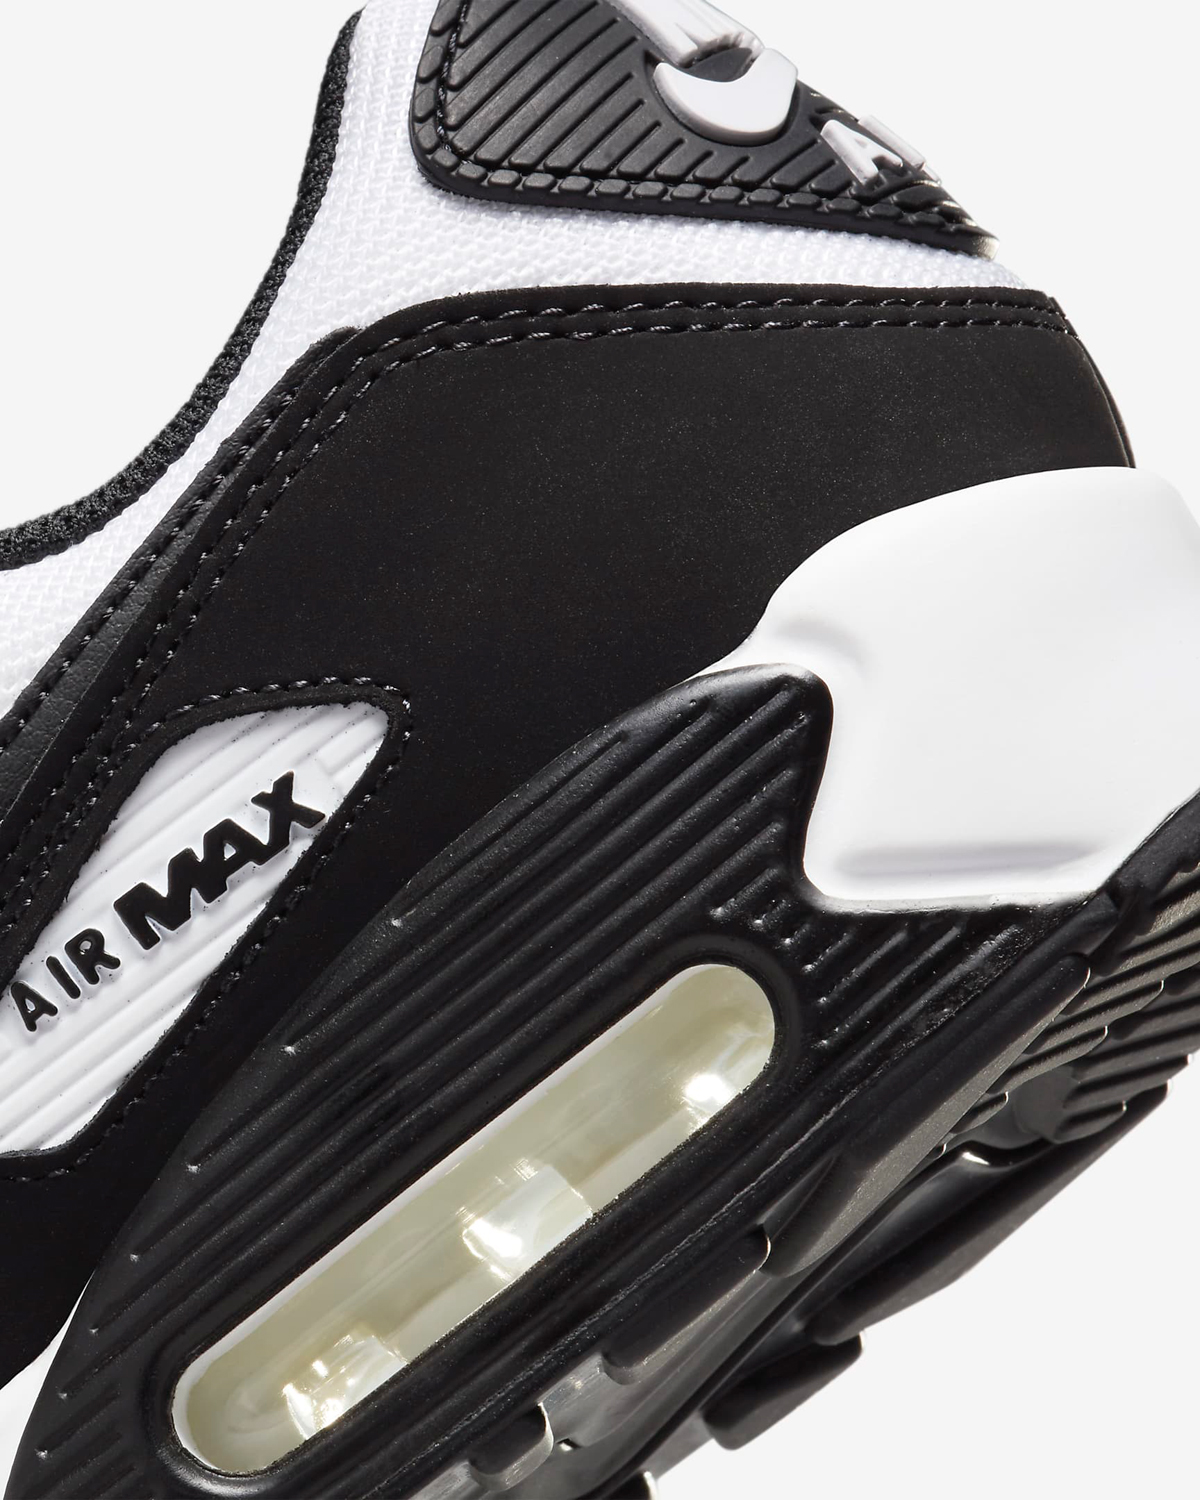 Nike-Air-Max-90-White-Black-Release-Date-8